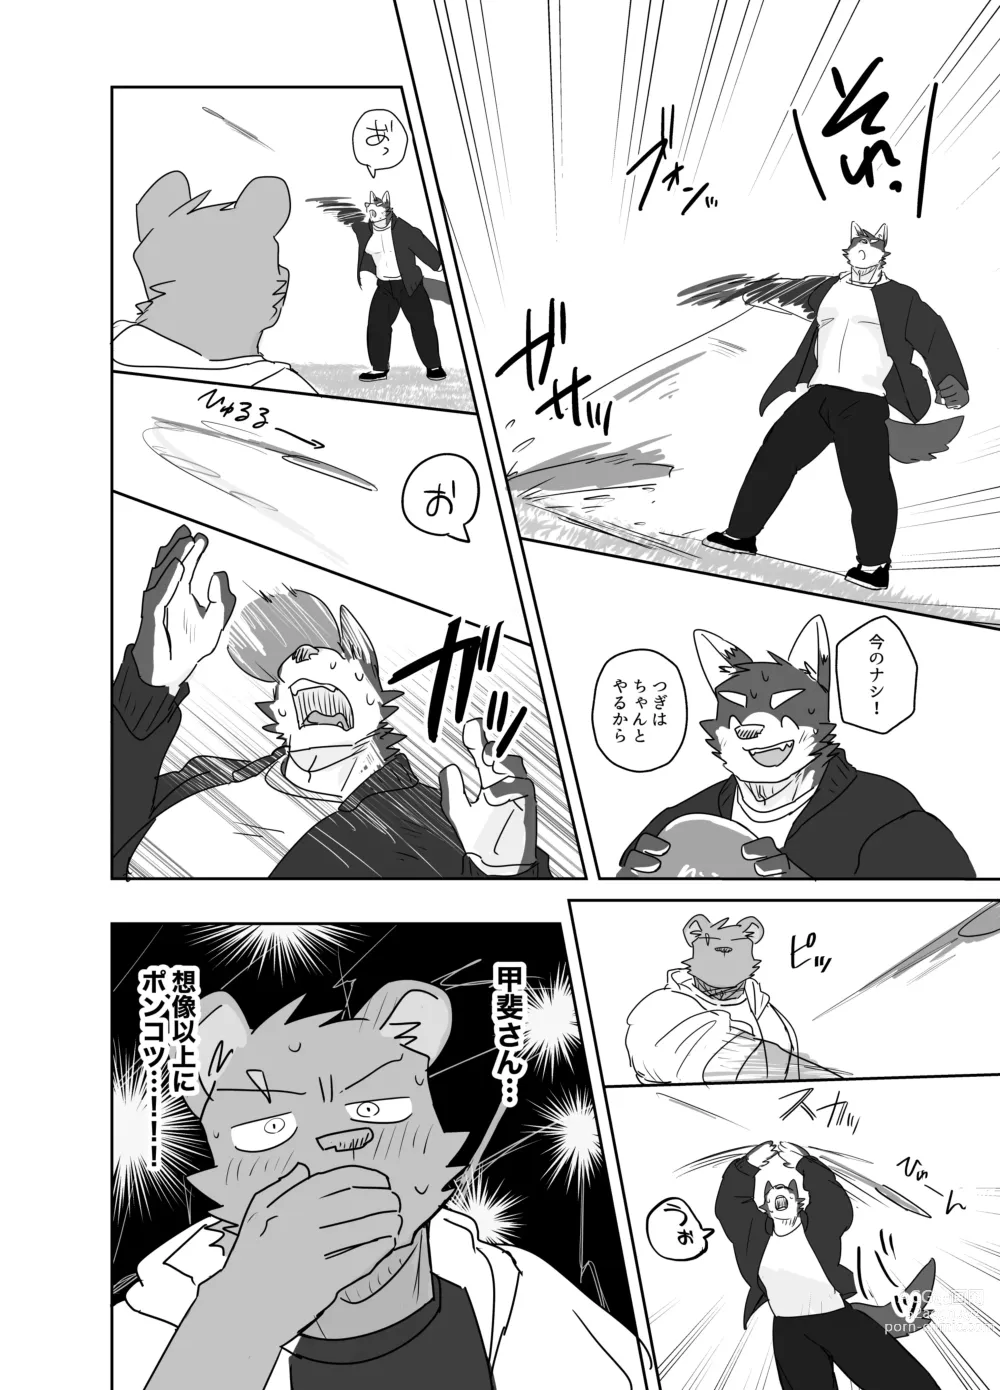 Page 6 of manga Frisbee